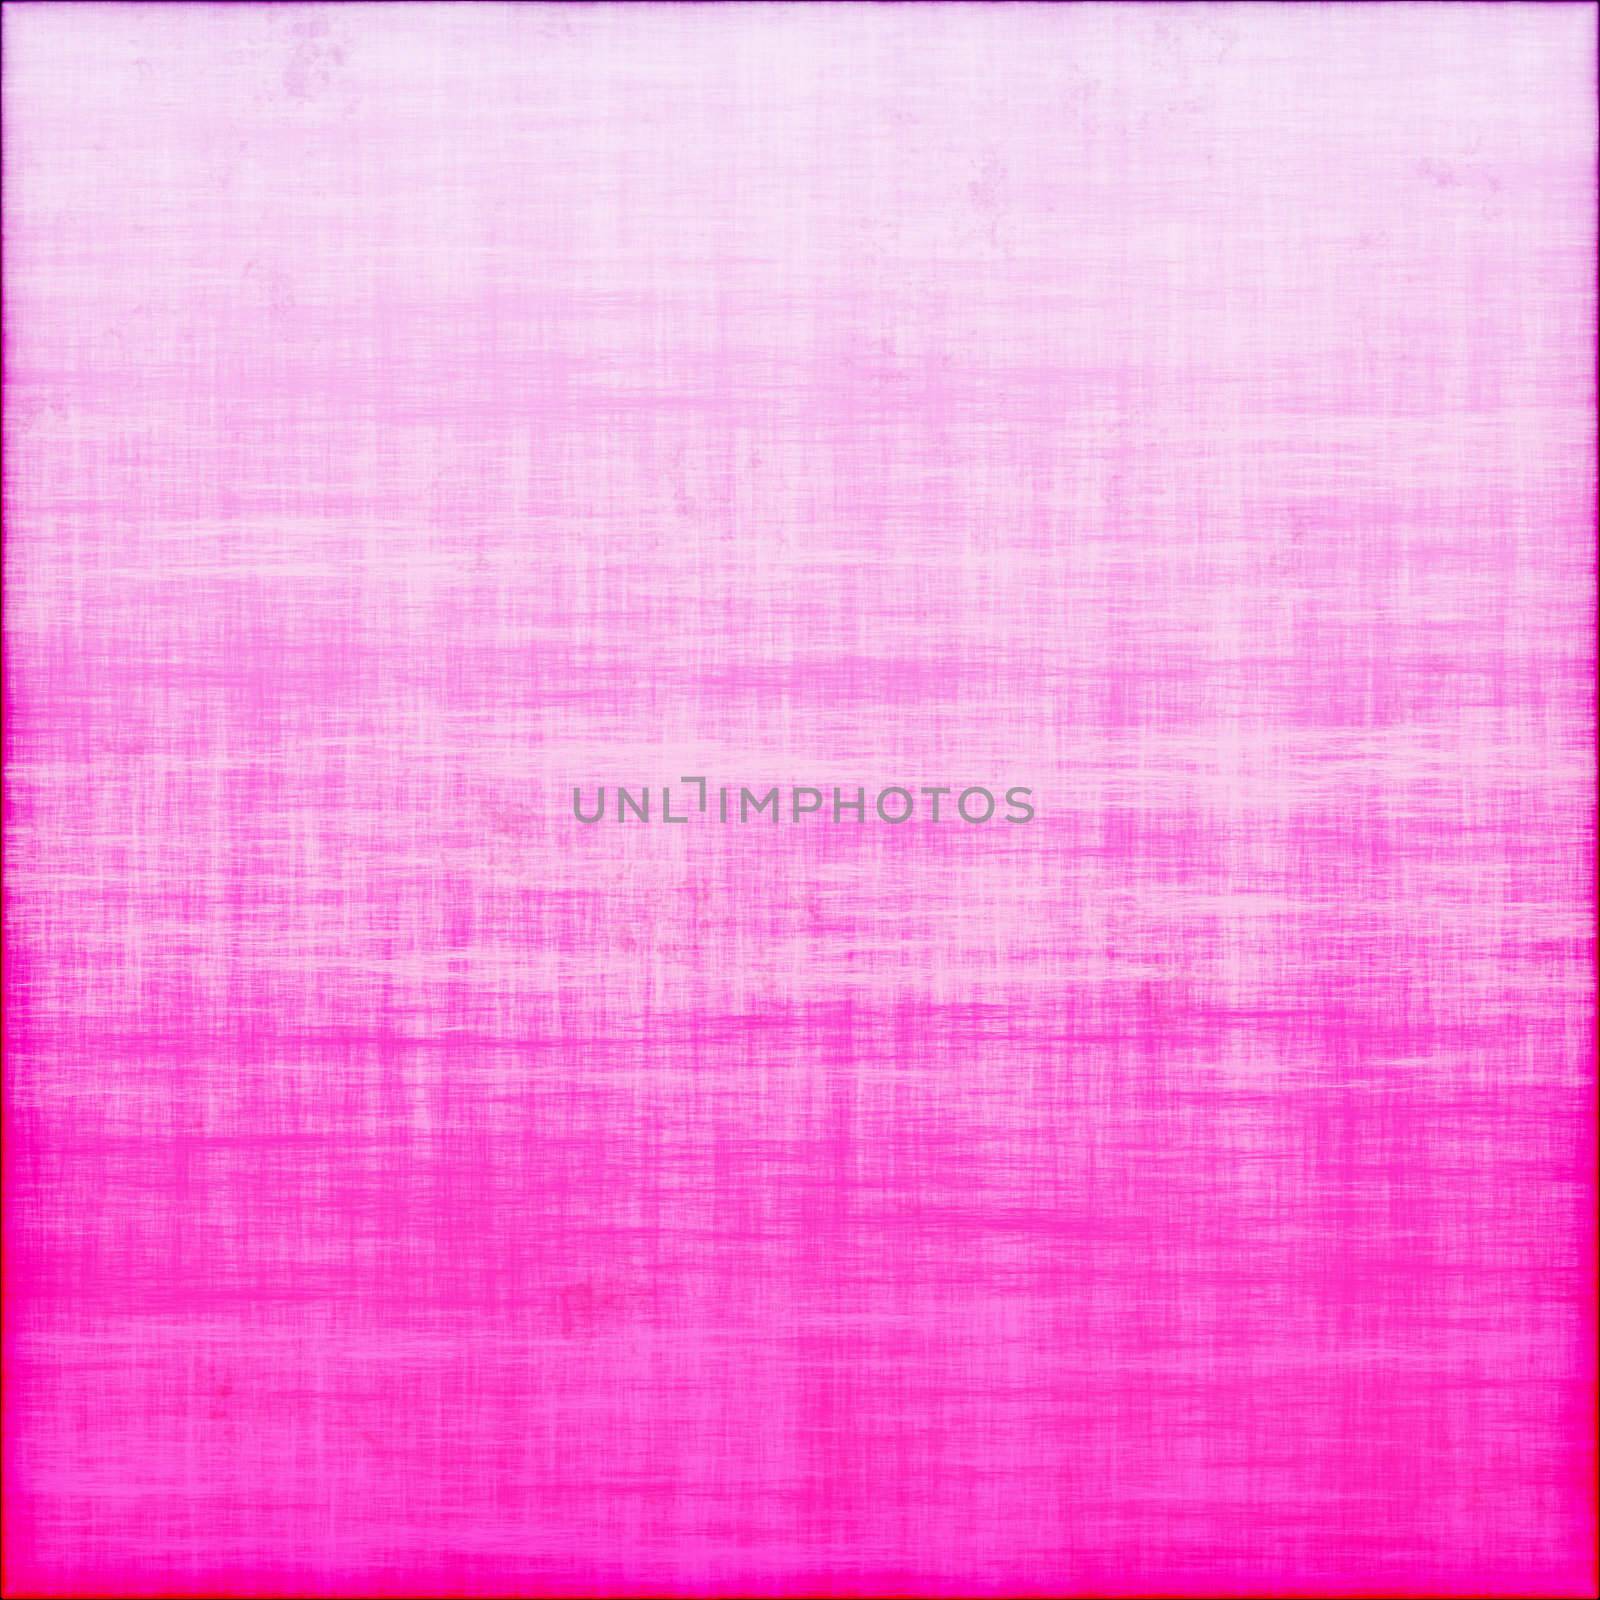 Grunge background in pink color